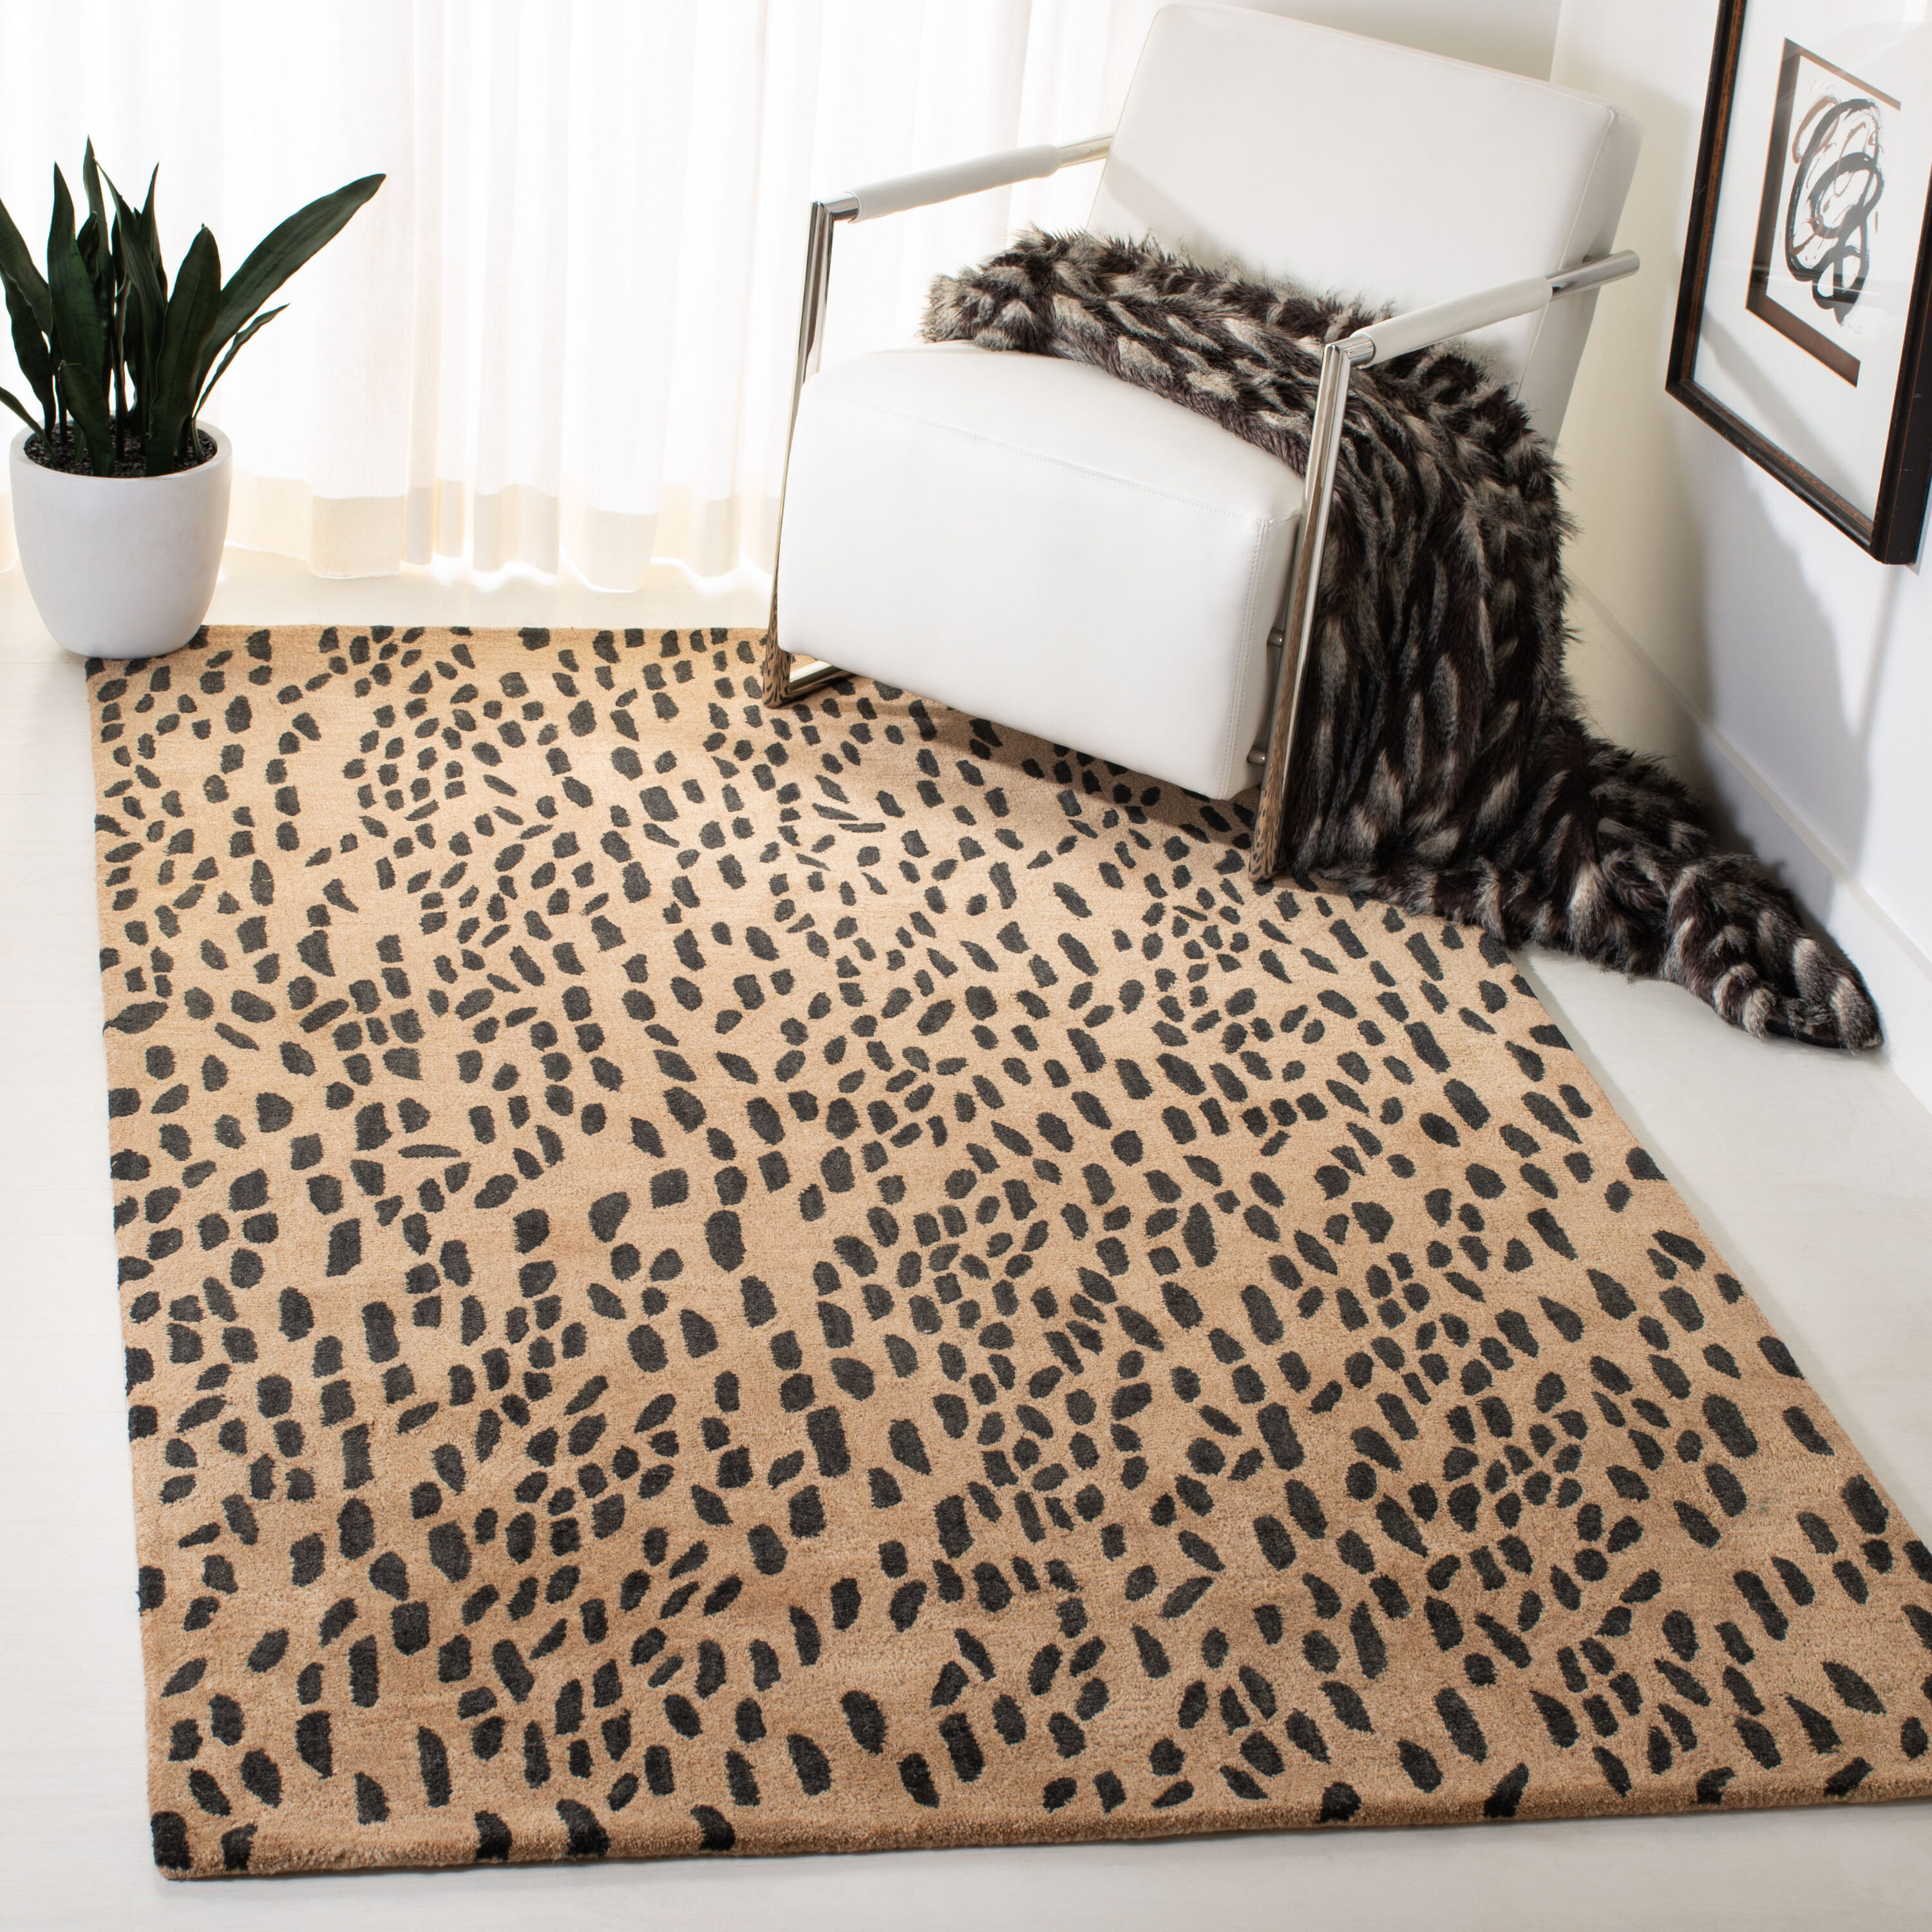 Safavieh Soho Leopard 10 x 14 Wool Beige/Brown Indoor Animal Print Area Rug  at